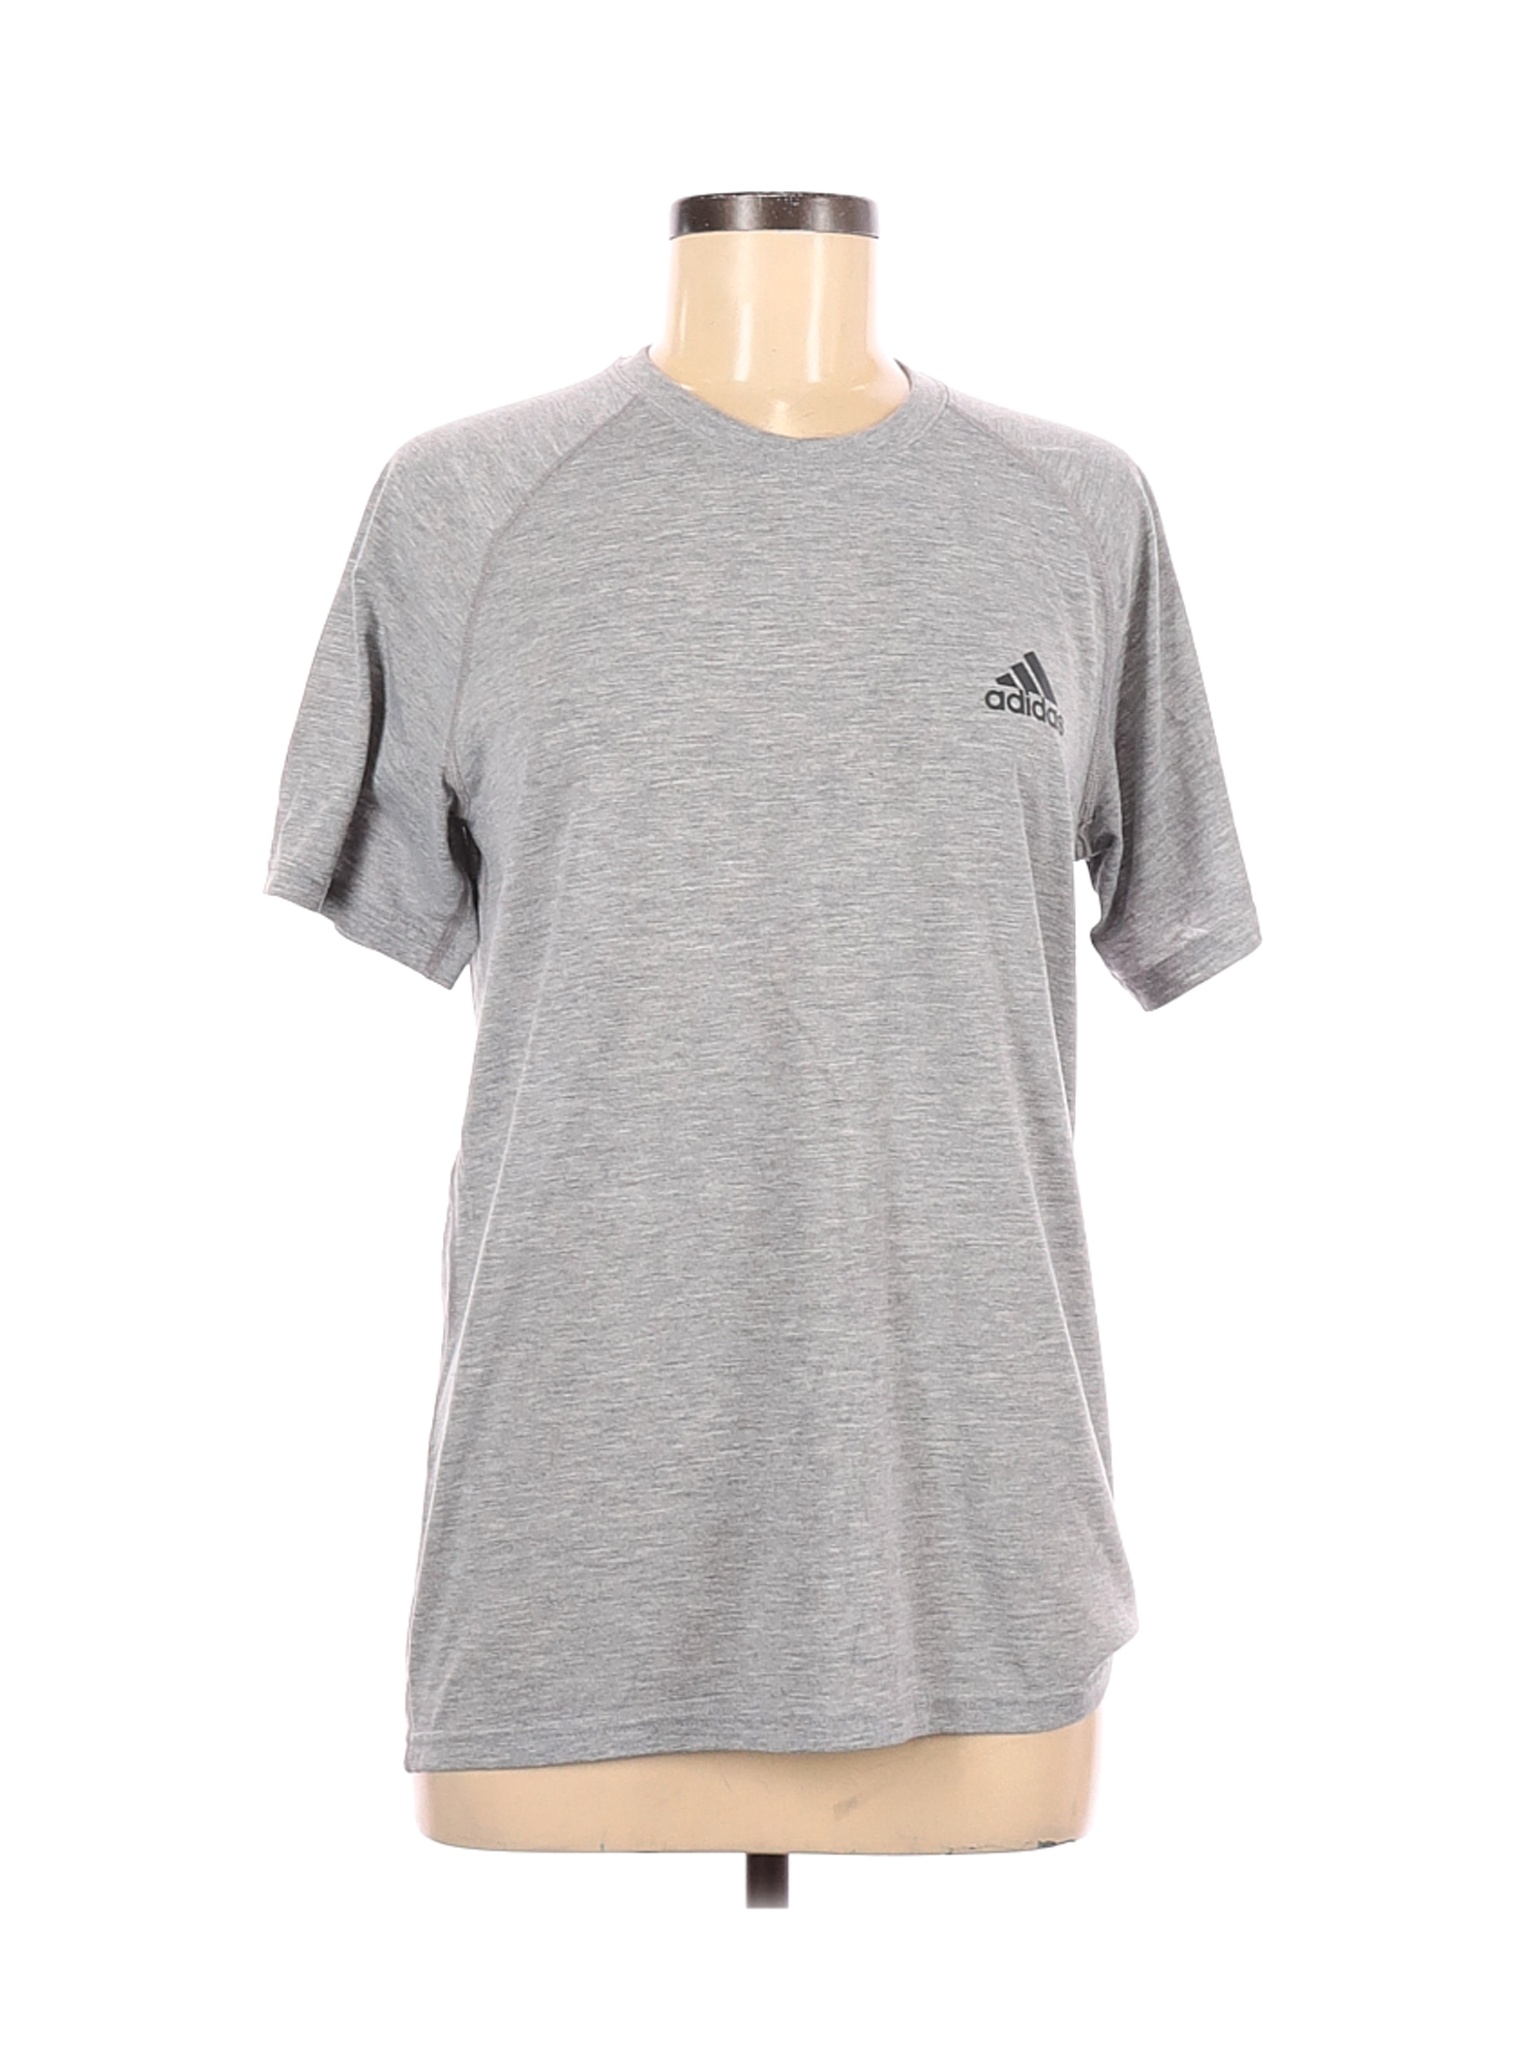 Adidas Women Gray Active T-Shirt M | eBay